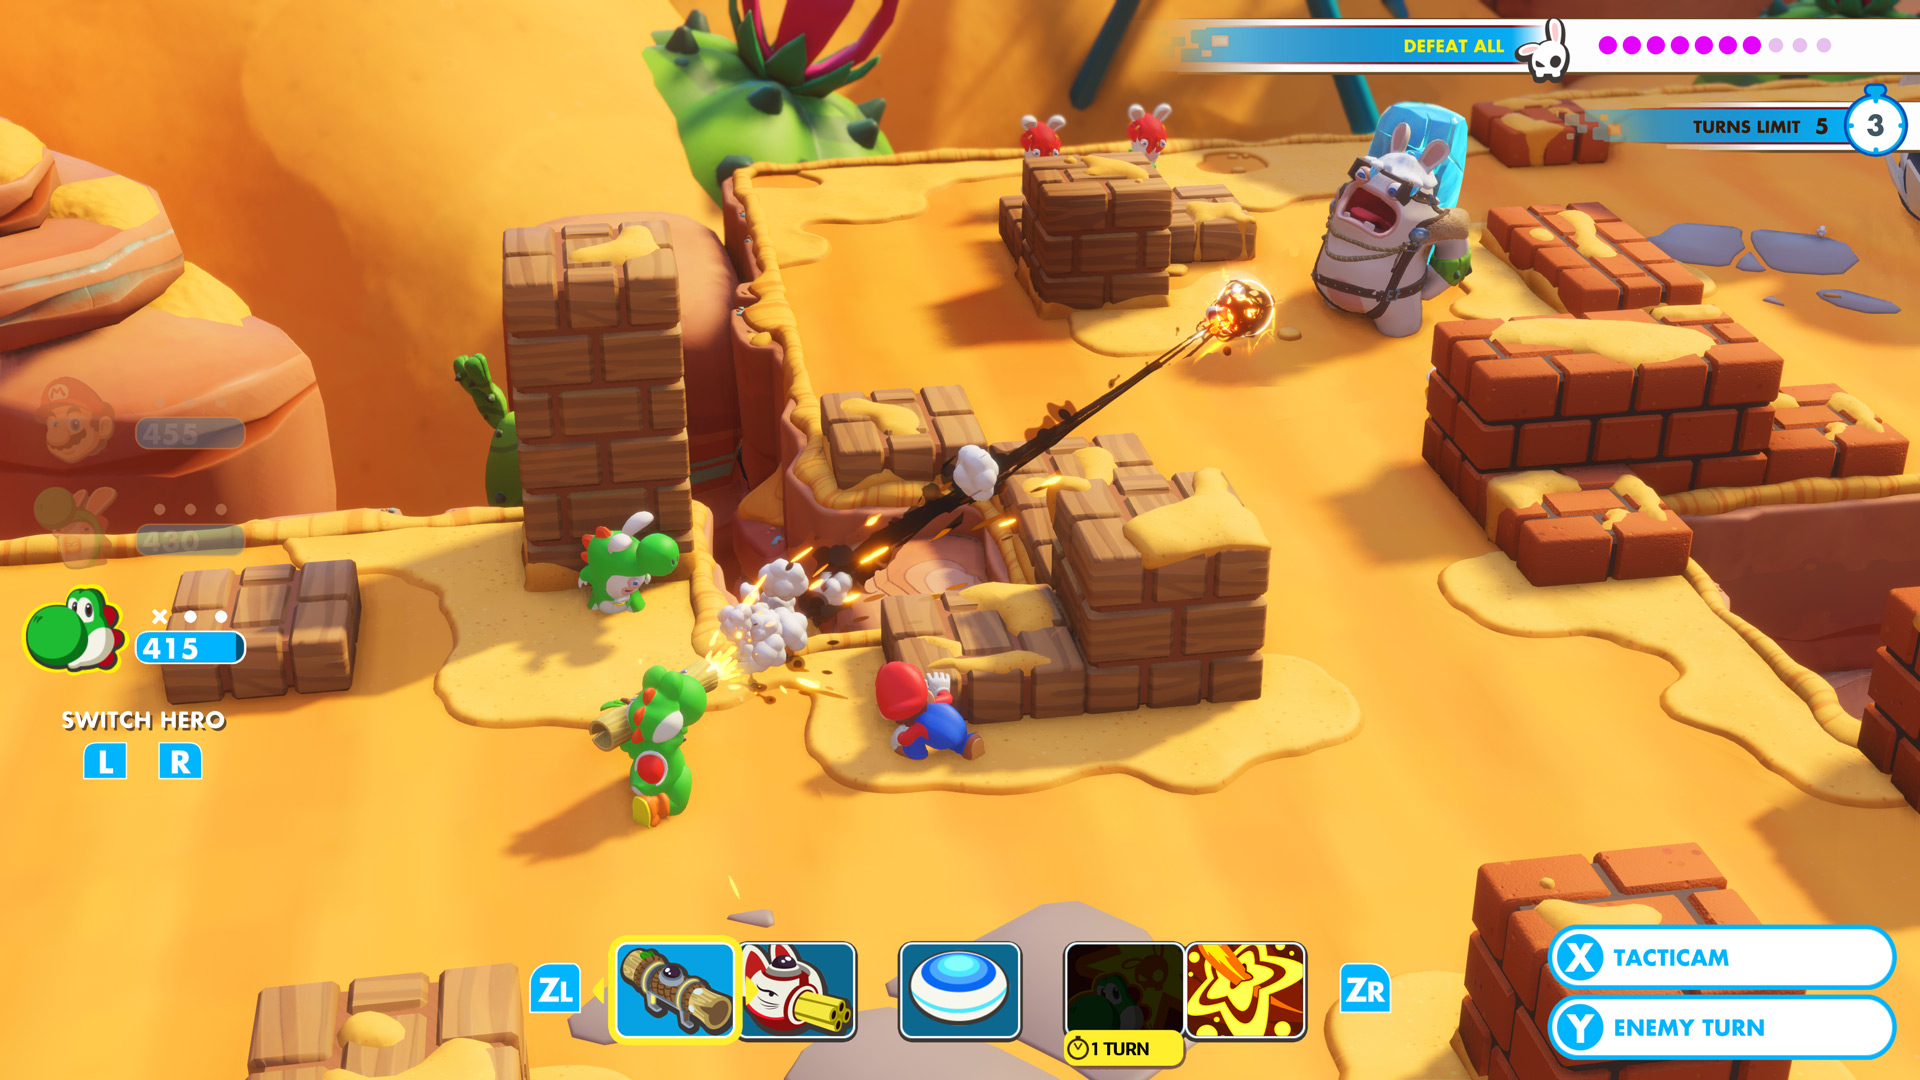 Yoshi firing a bazooka at a rabbid brute while Mario and Rabbid Yoshi hide behind cover — Mario + Rabbids Kingdom Battle